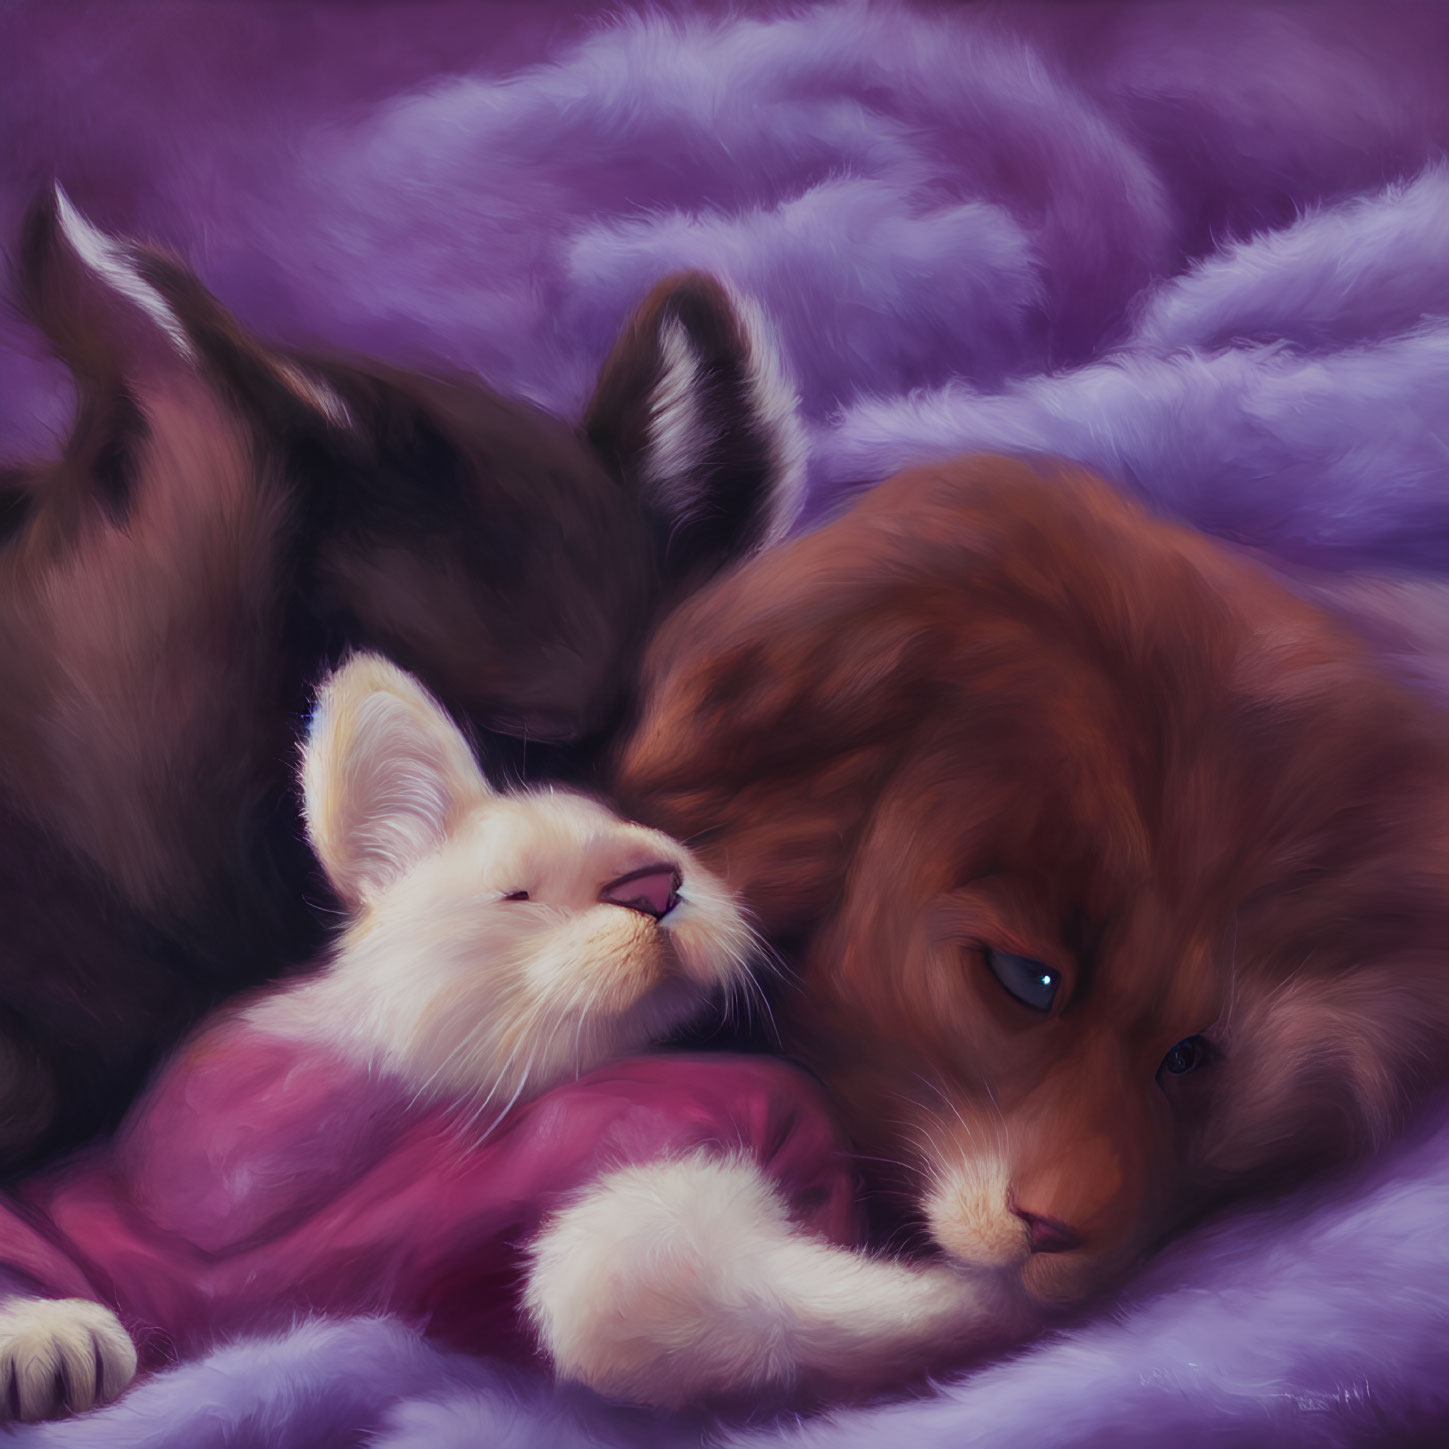 White Kitten and Brown Puppy Cuddled on Purple Blanket